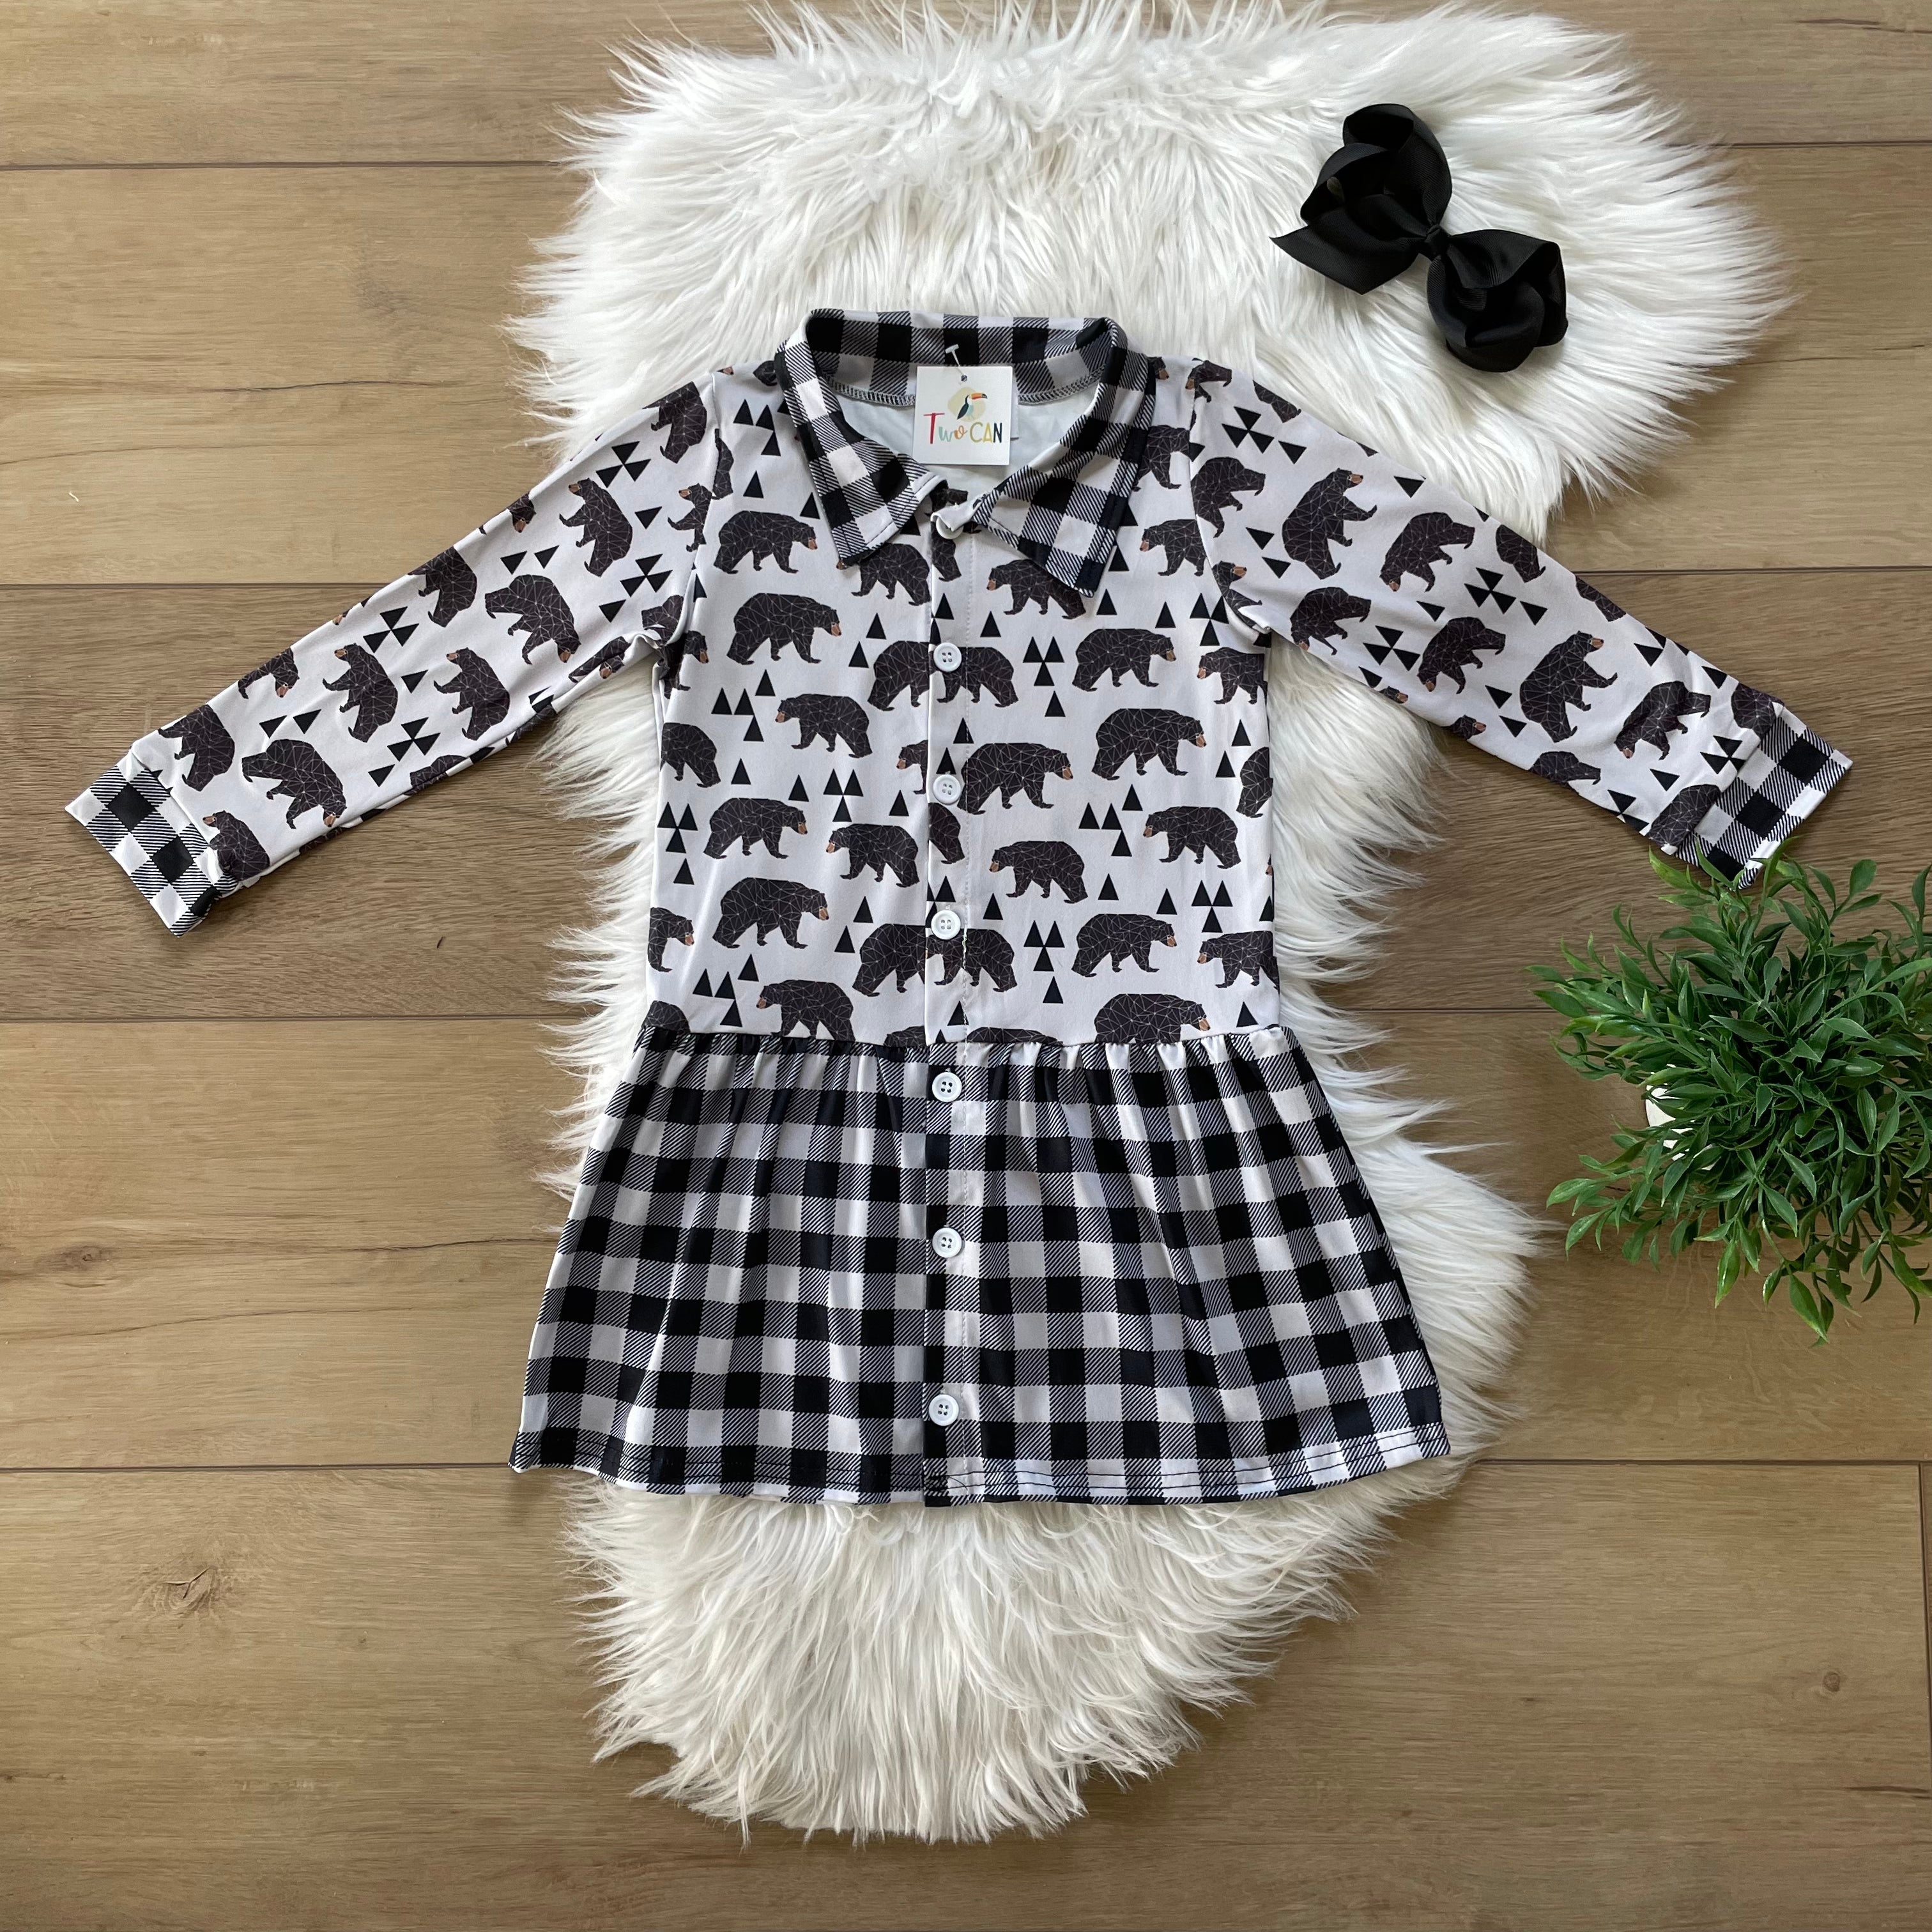 Black Bears Dress by Twocan